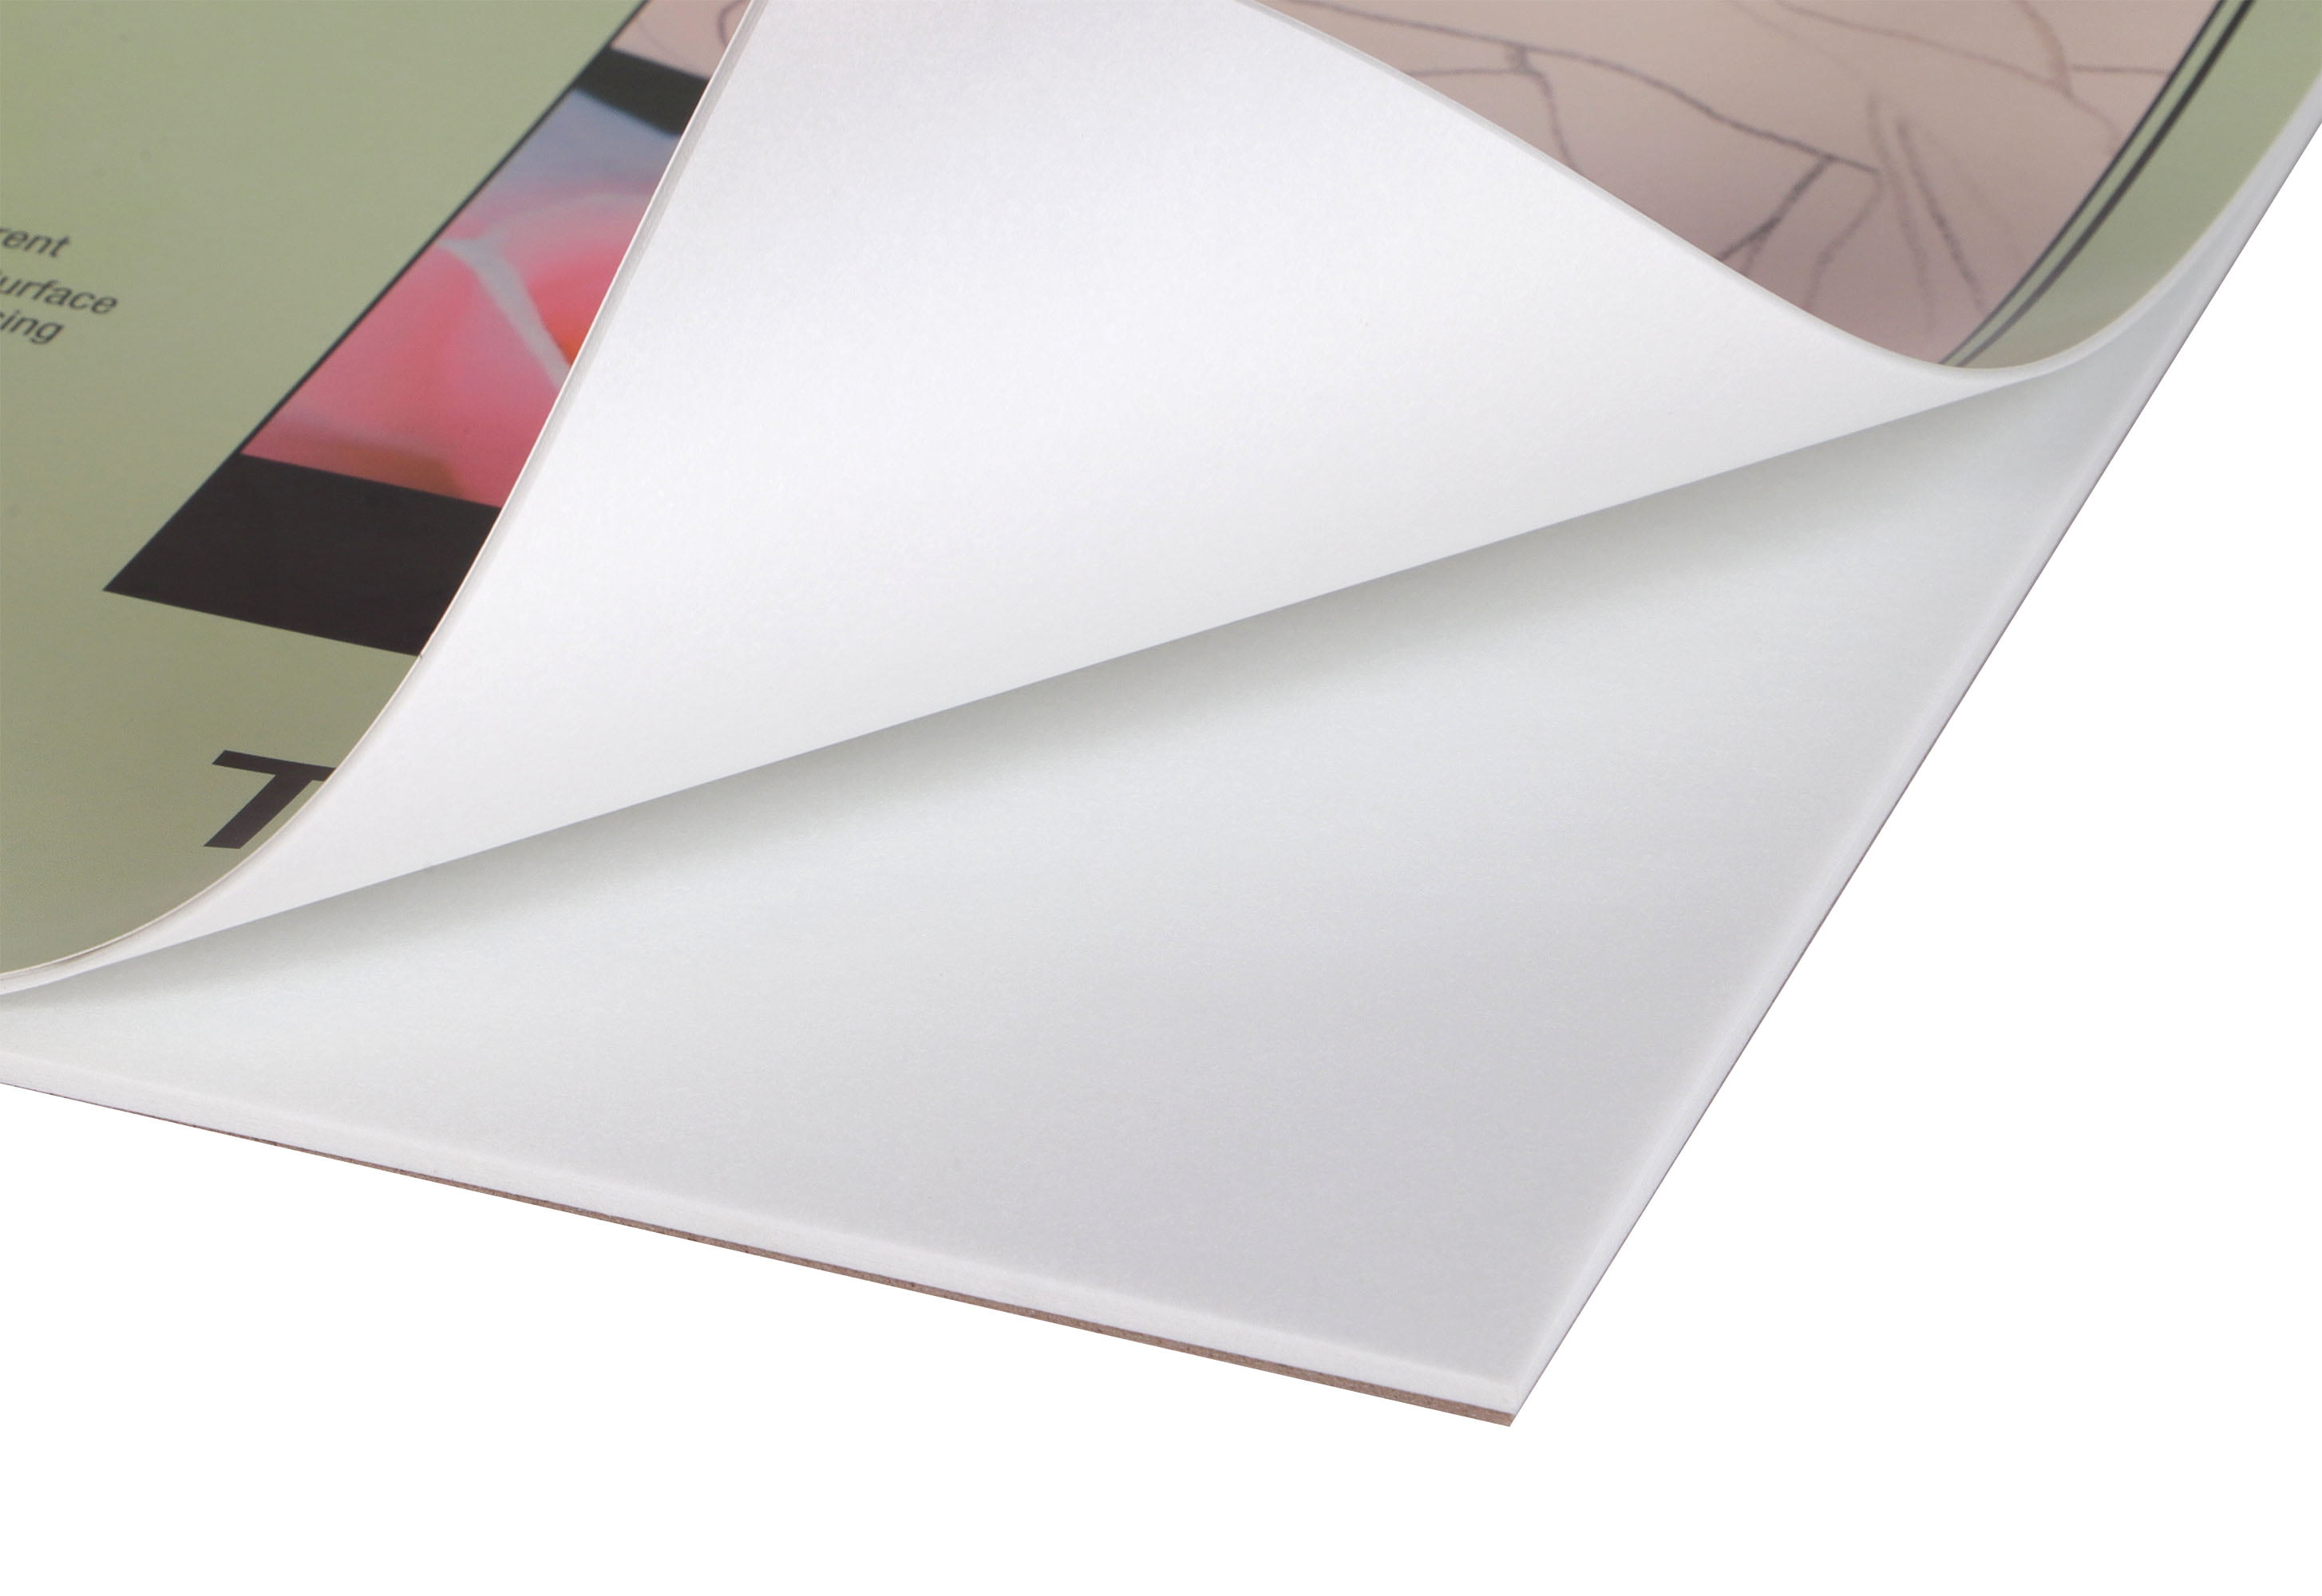 PRO ART Tracing Paper Pad, 25lb, 18 x 24 inch Translucent Tracing